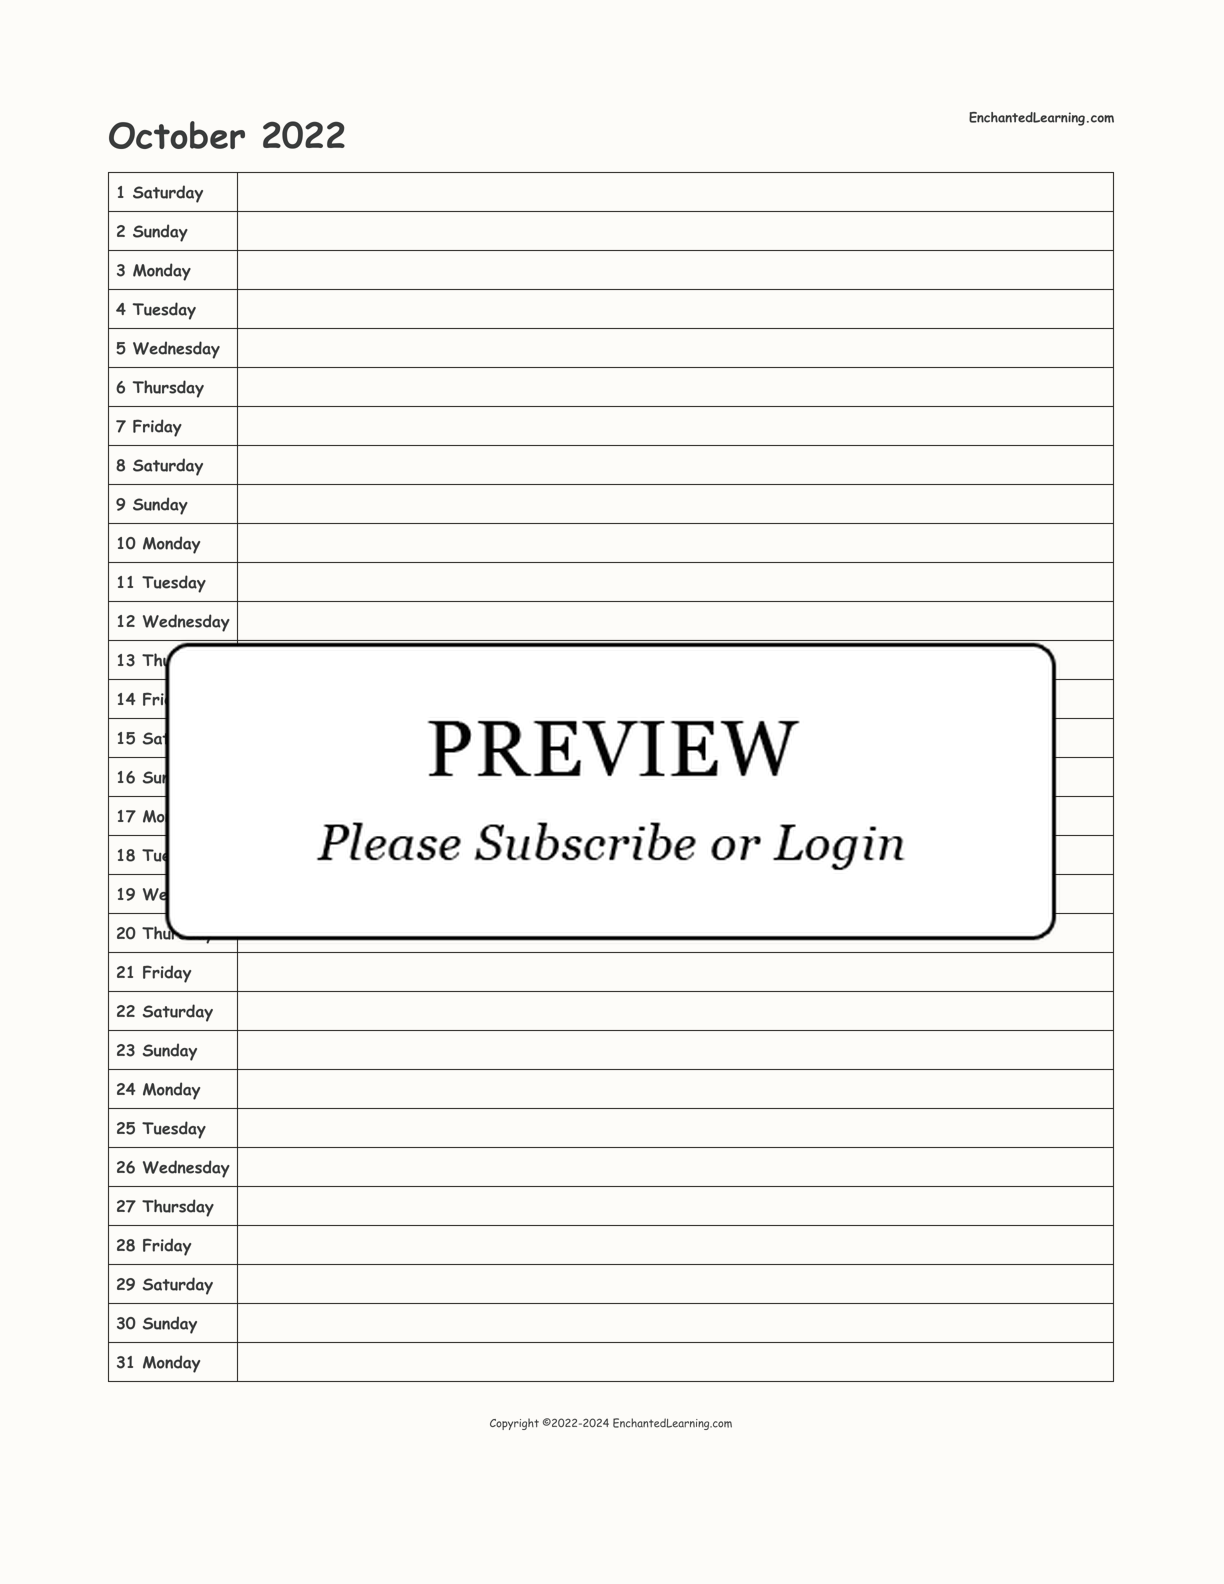 October 2022 Calendar interactive printout page 1